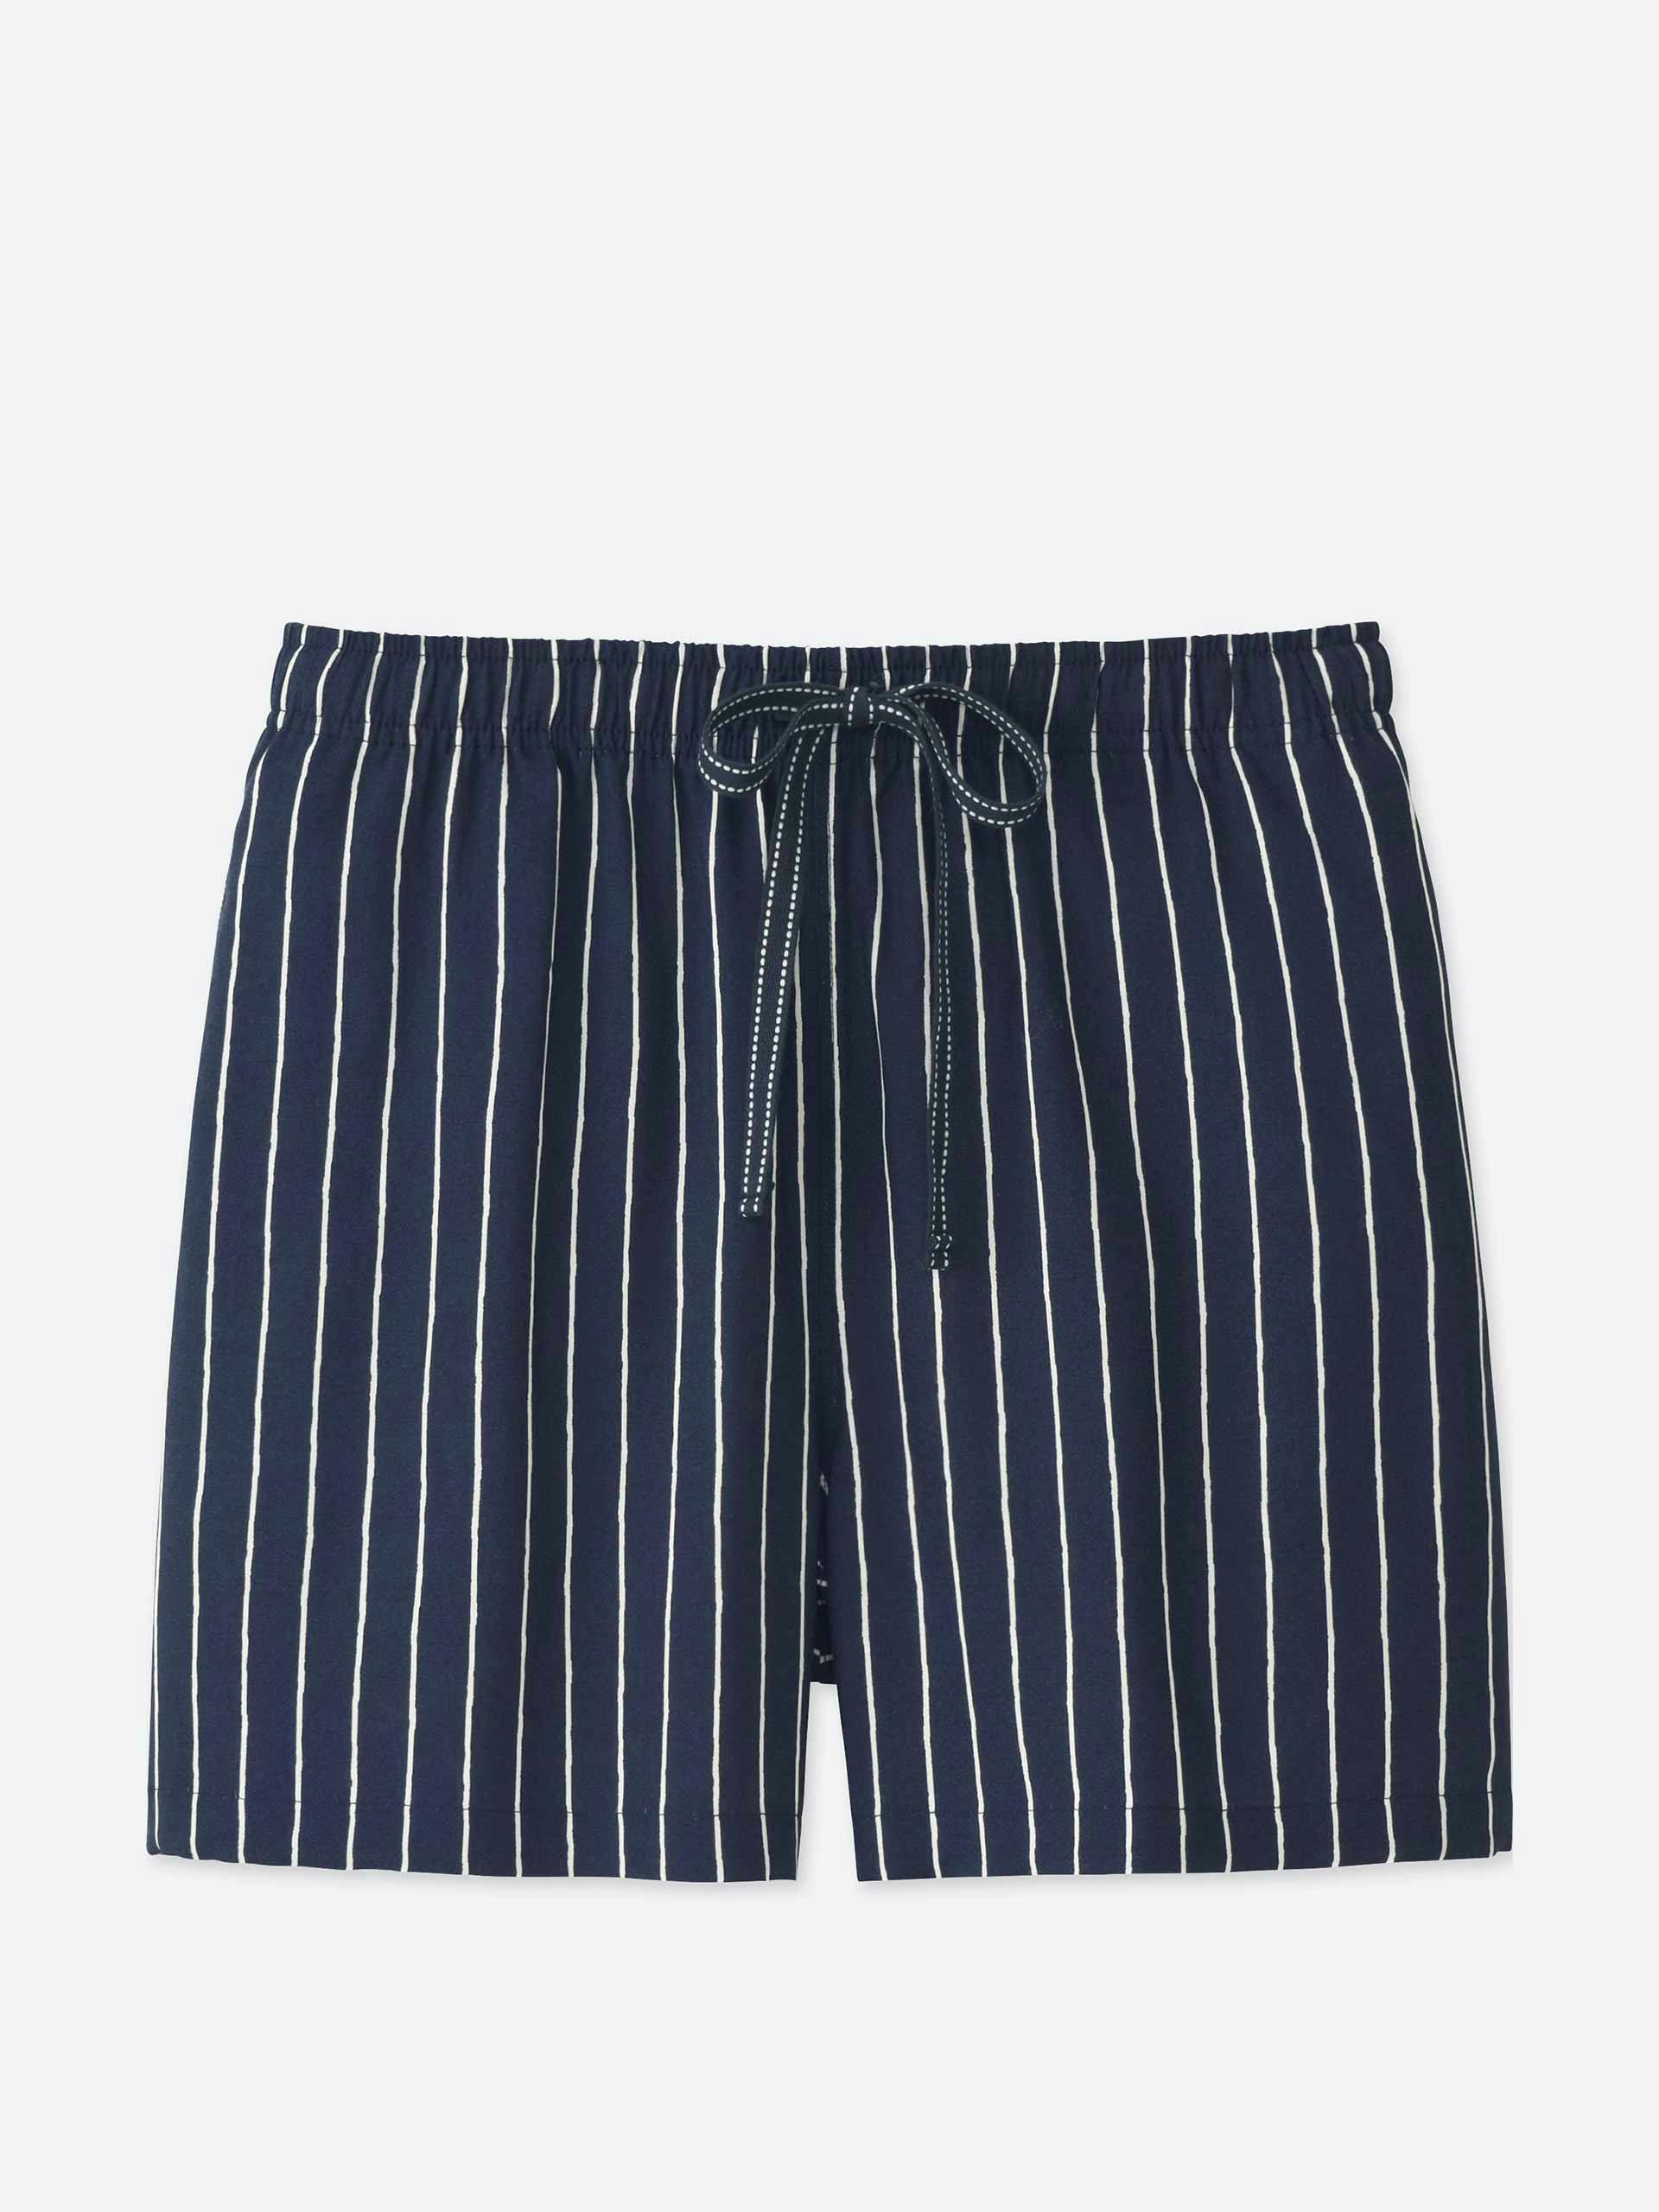 Blue linen striped shorts